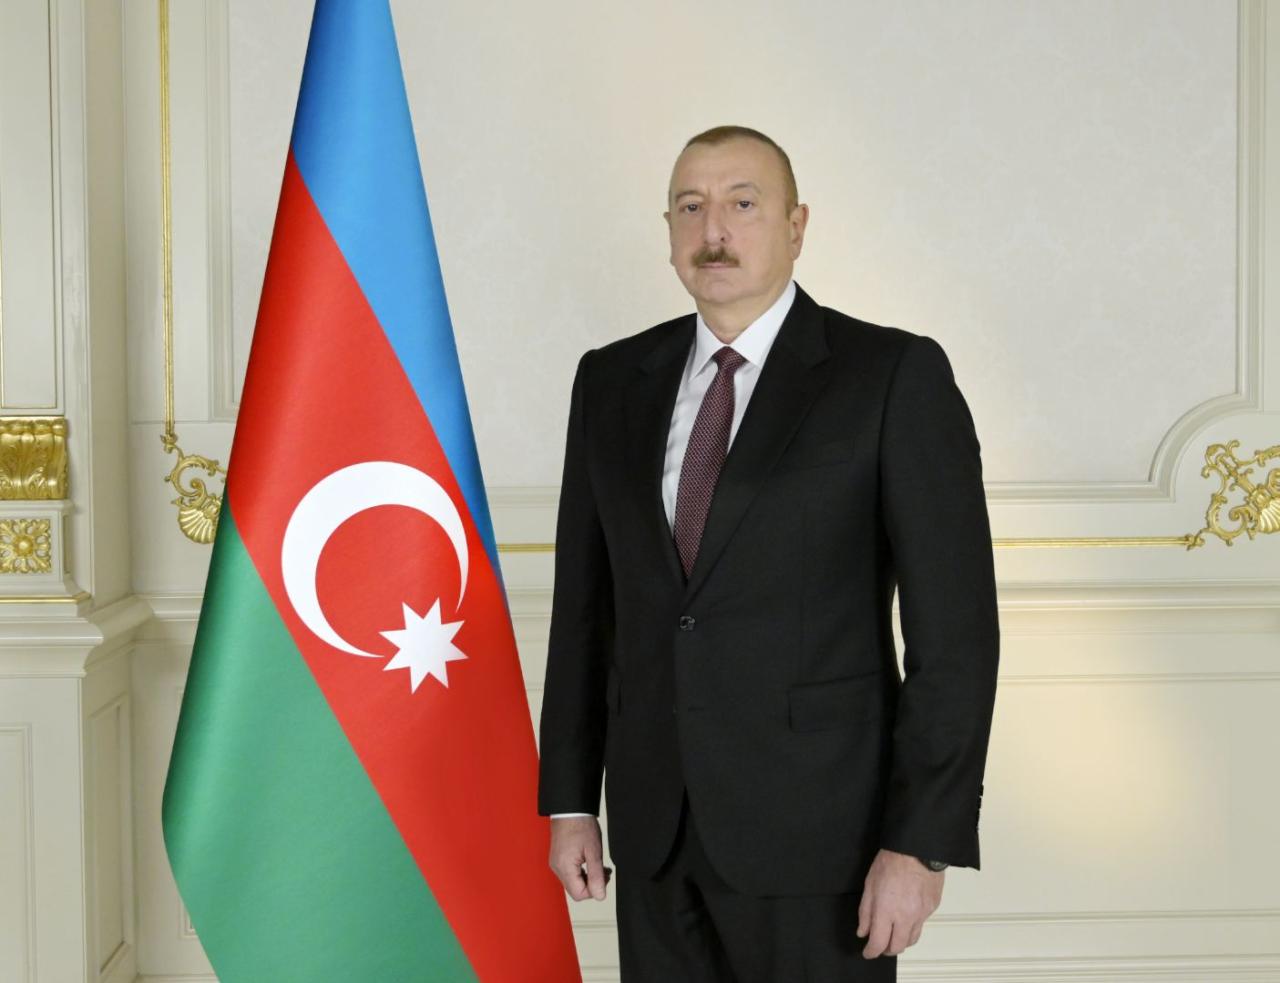 President Ilham Aliyev marks National Press Day in Facebook post [PHOTO]